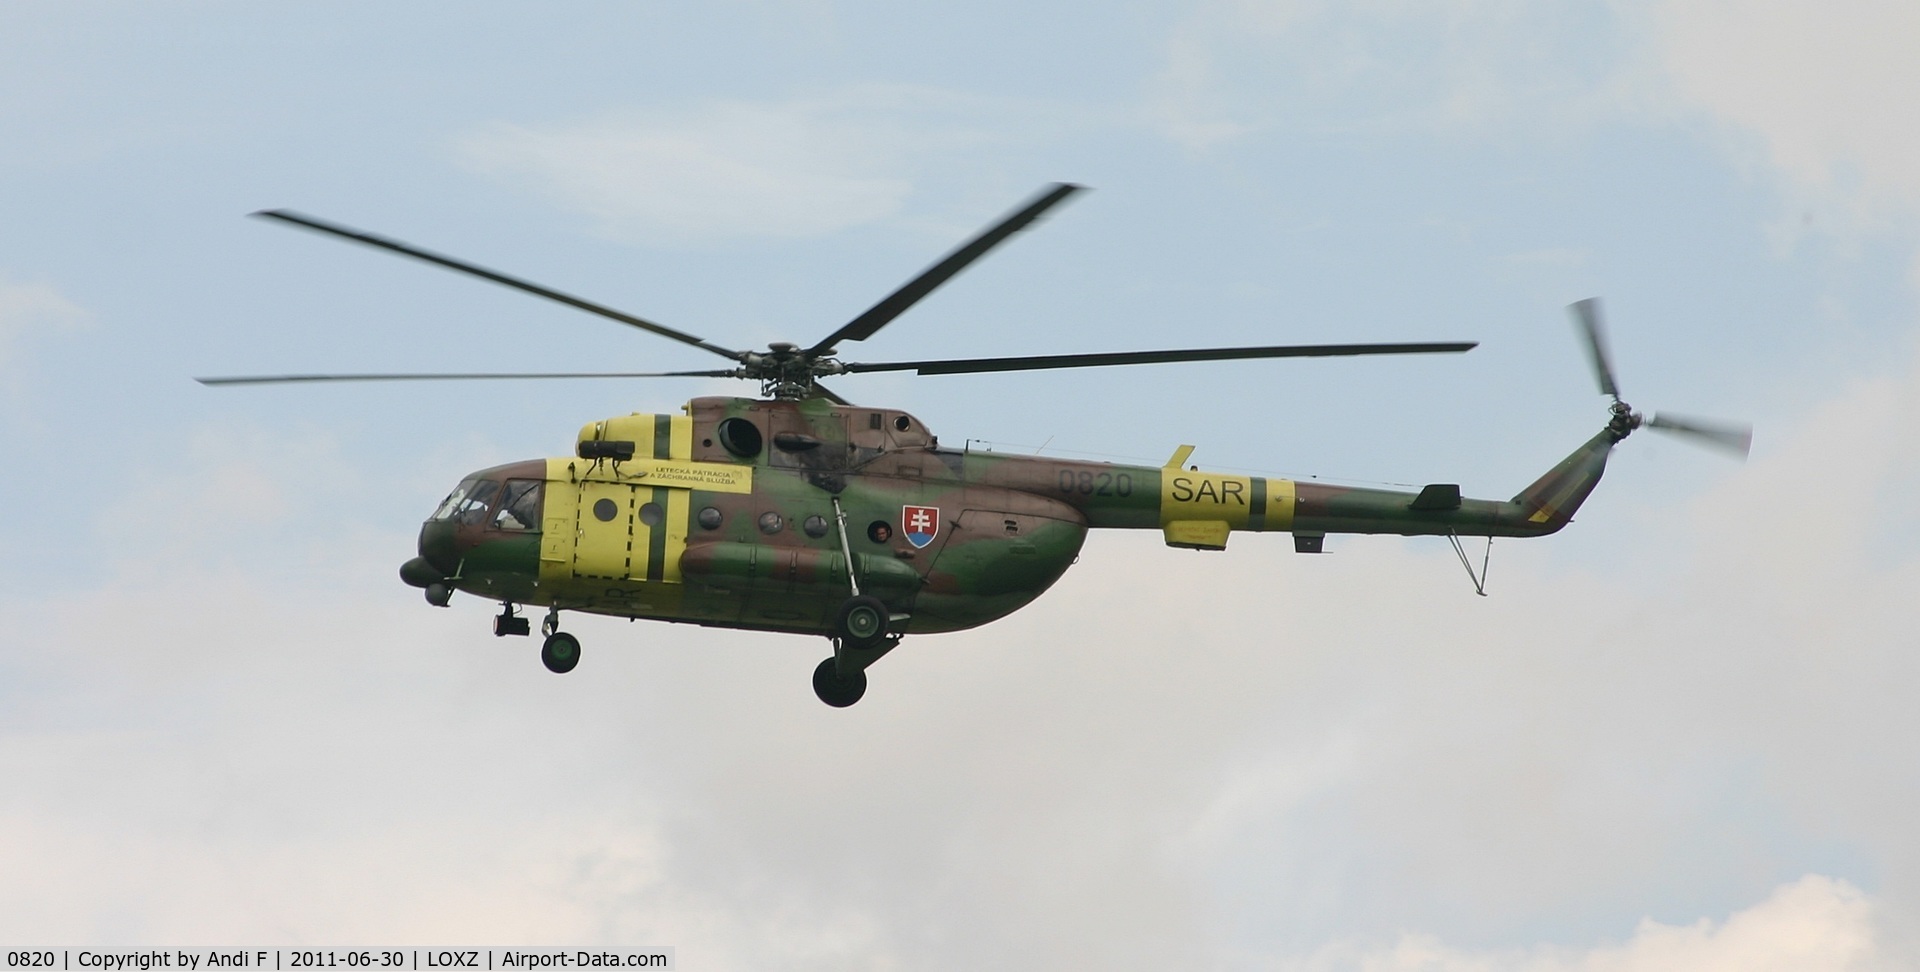 0820, Mil Mi-17M C/N 108M20, MI-17 at Airpower11